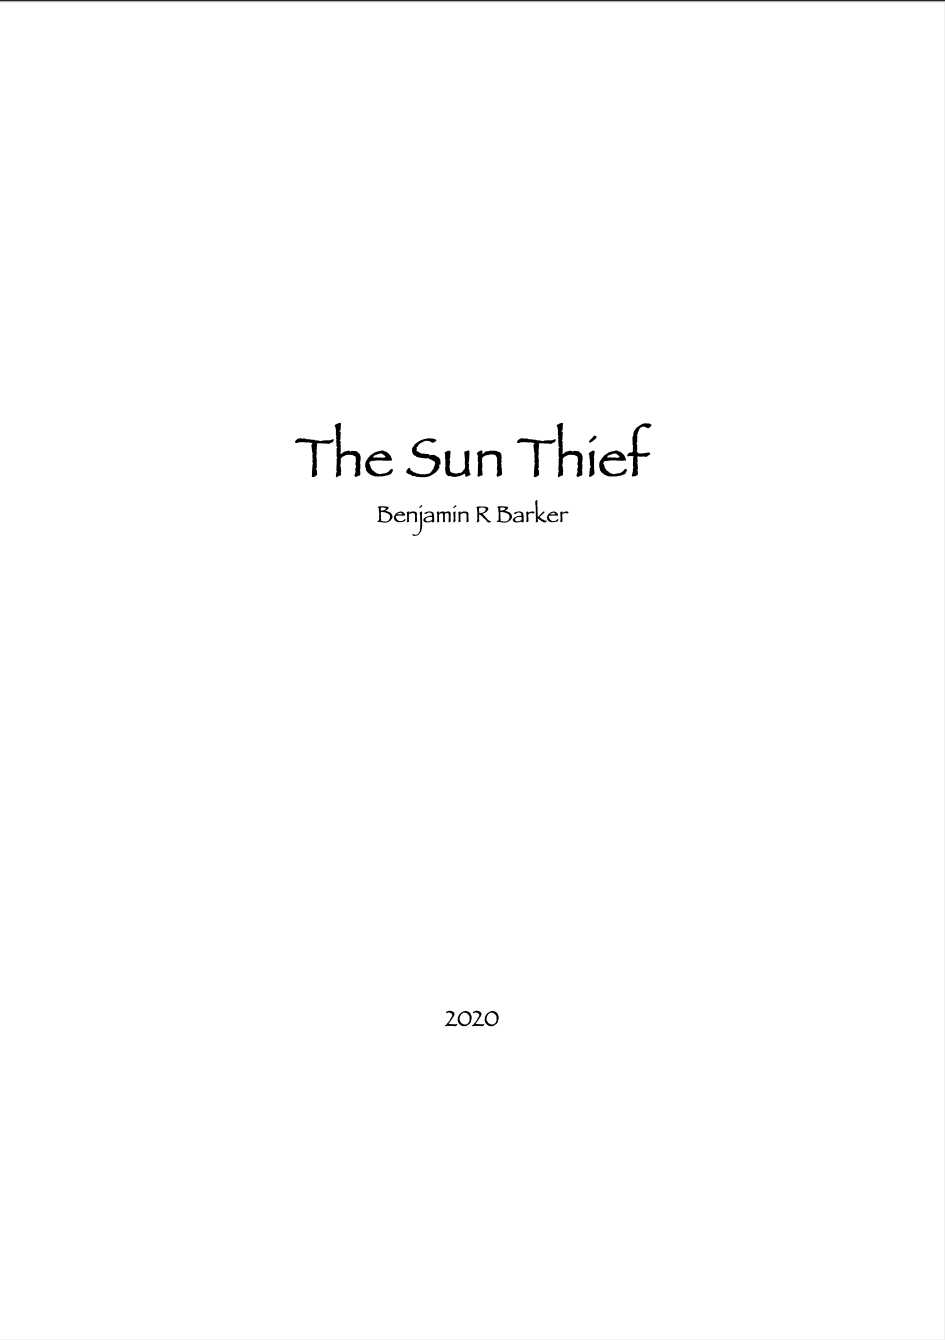 The Sun Thief by Benjamin R. Barker